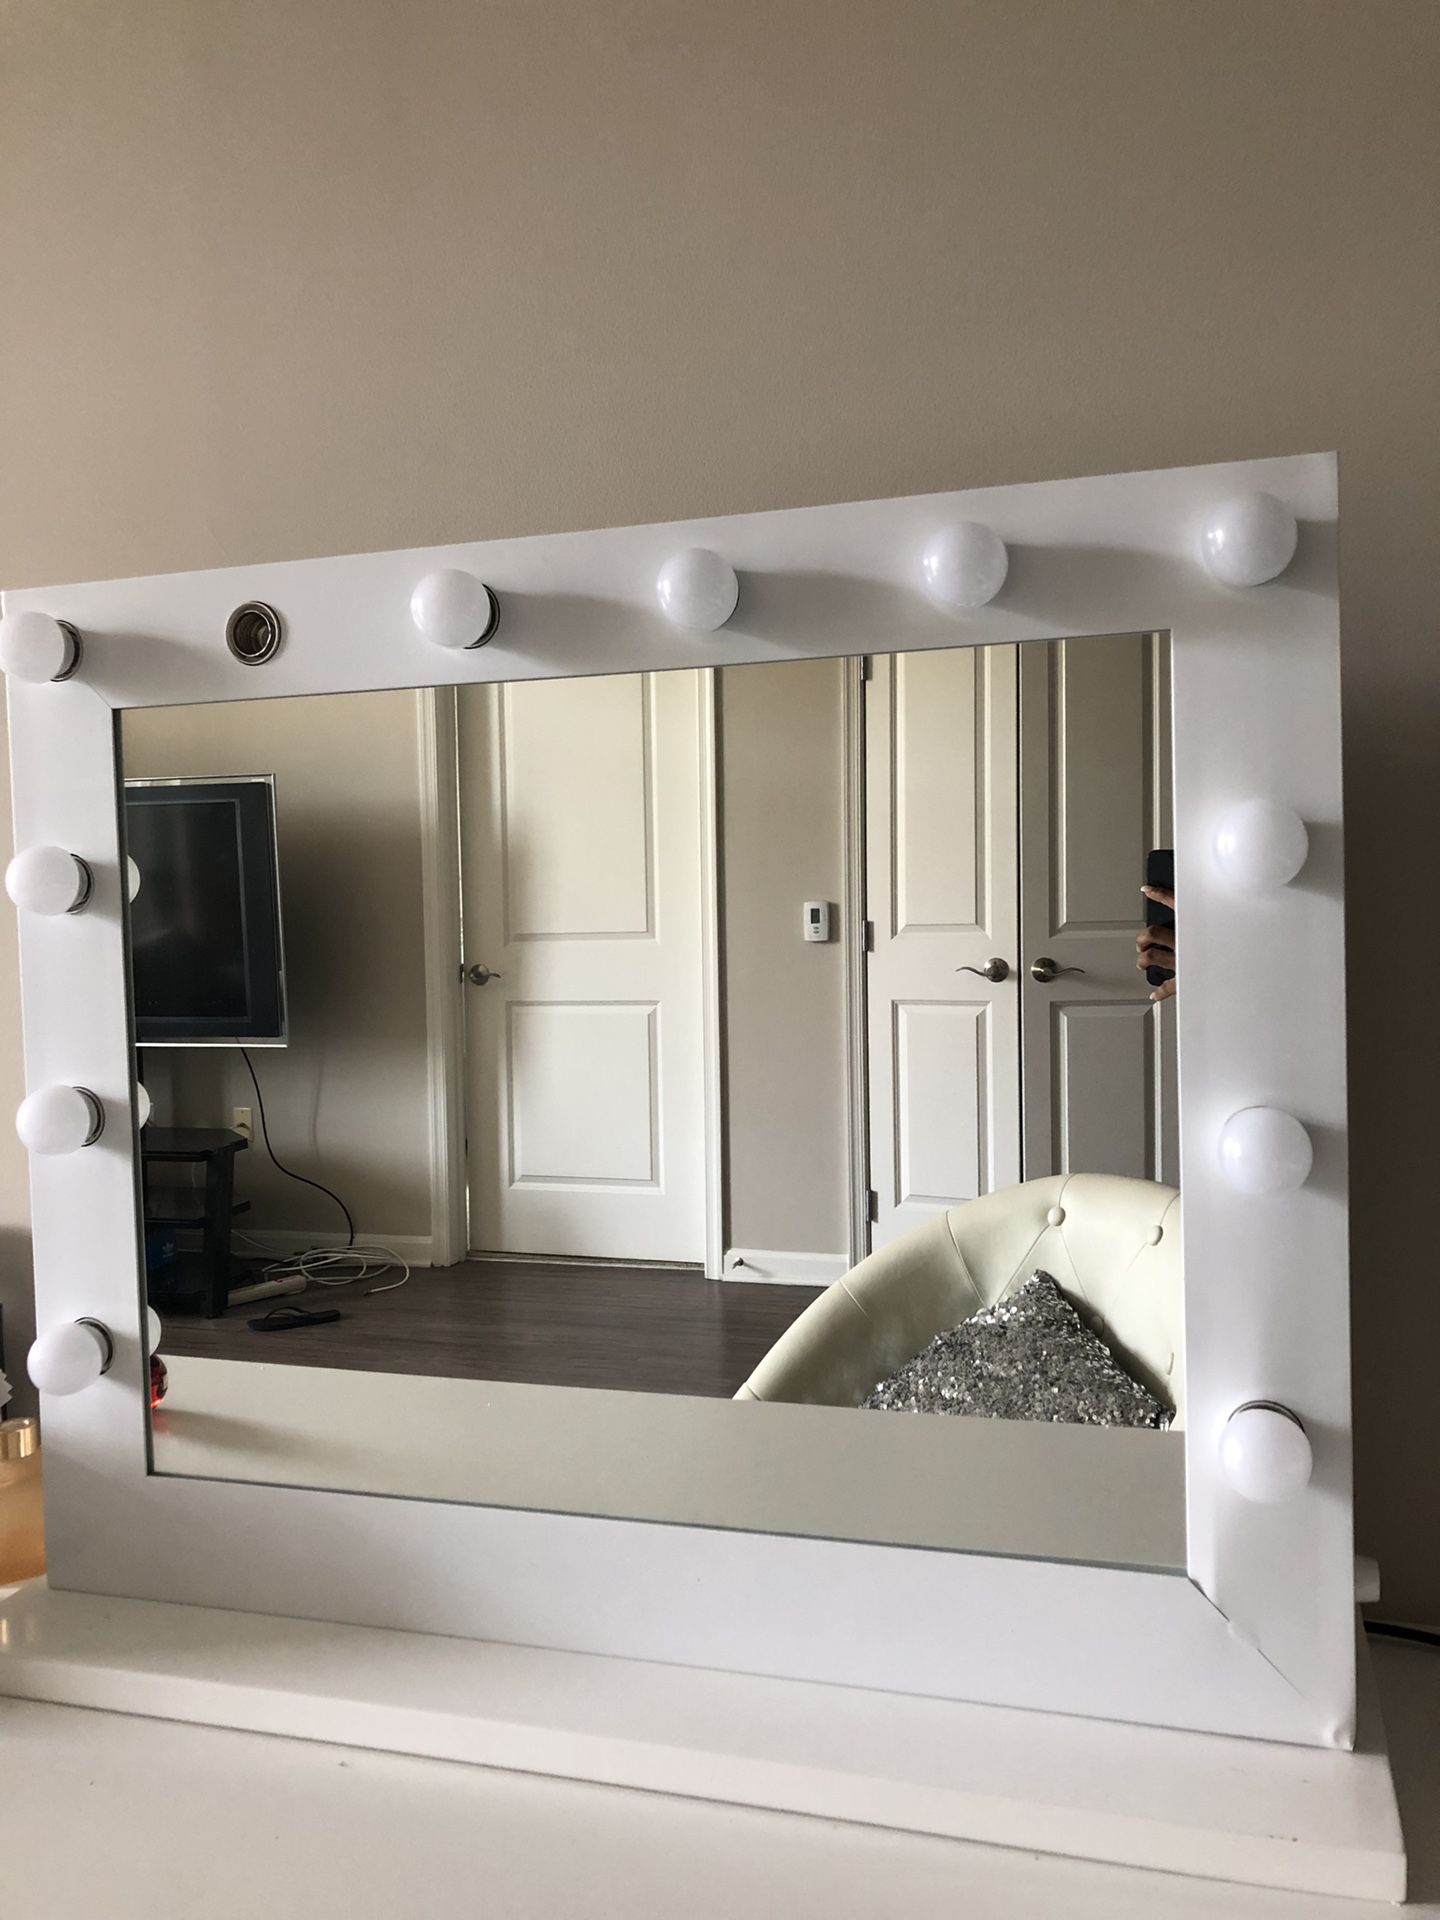 LED Makeup Mirror/Vanity (Doesn’t work)